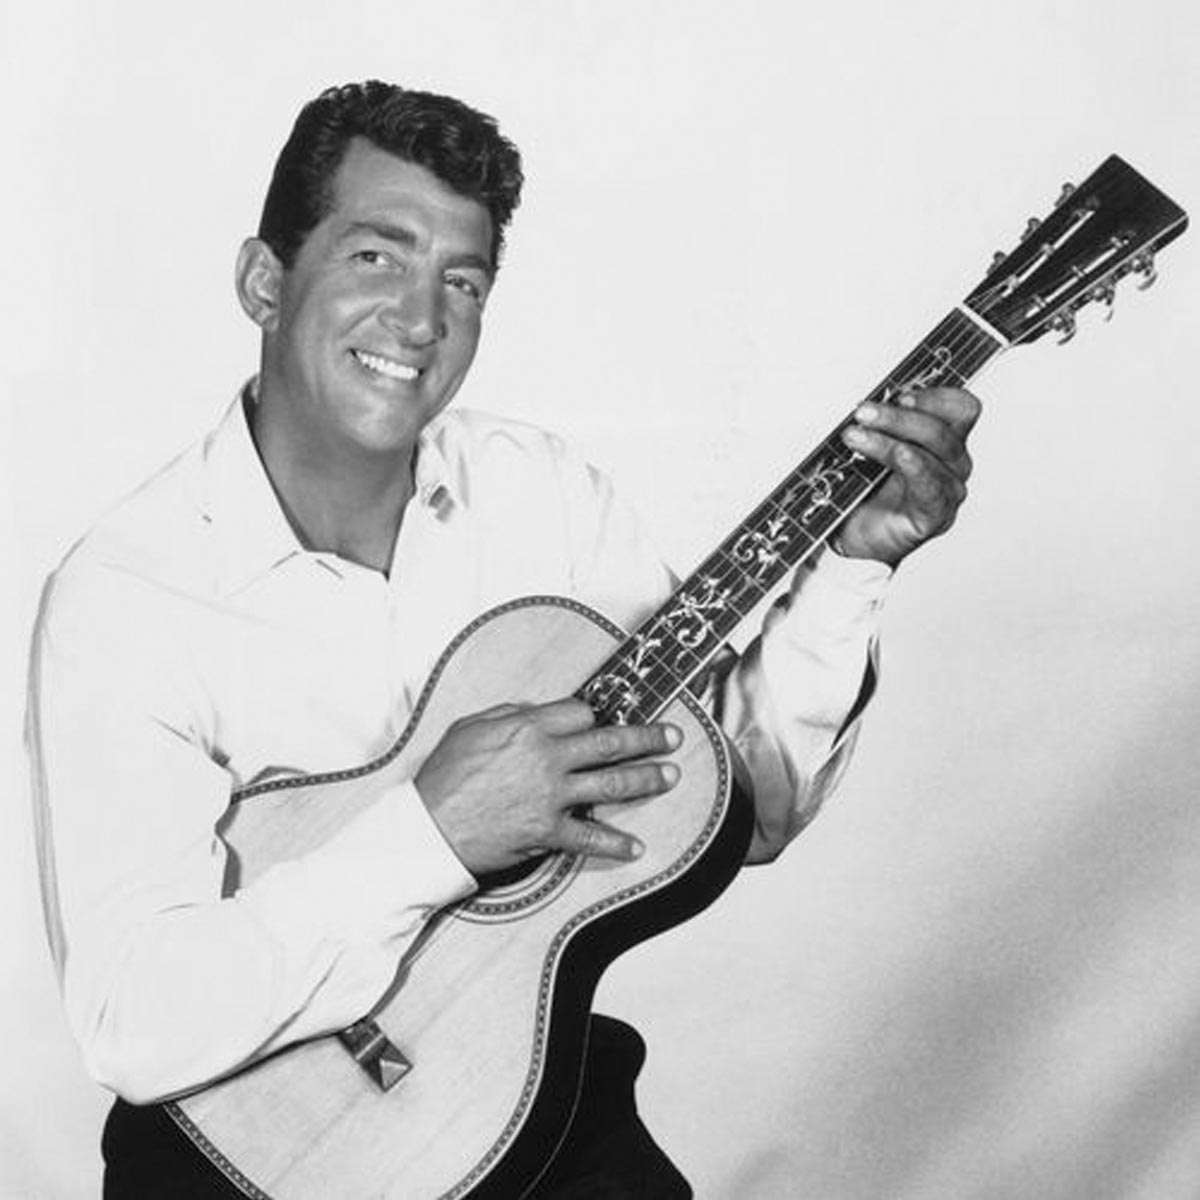 Dean Martin posing with a guitar